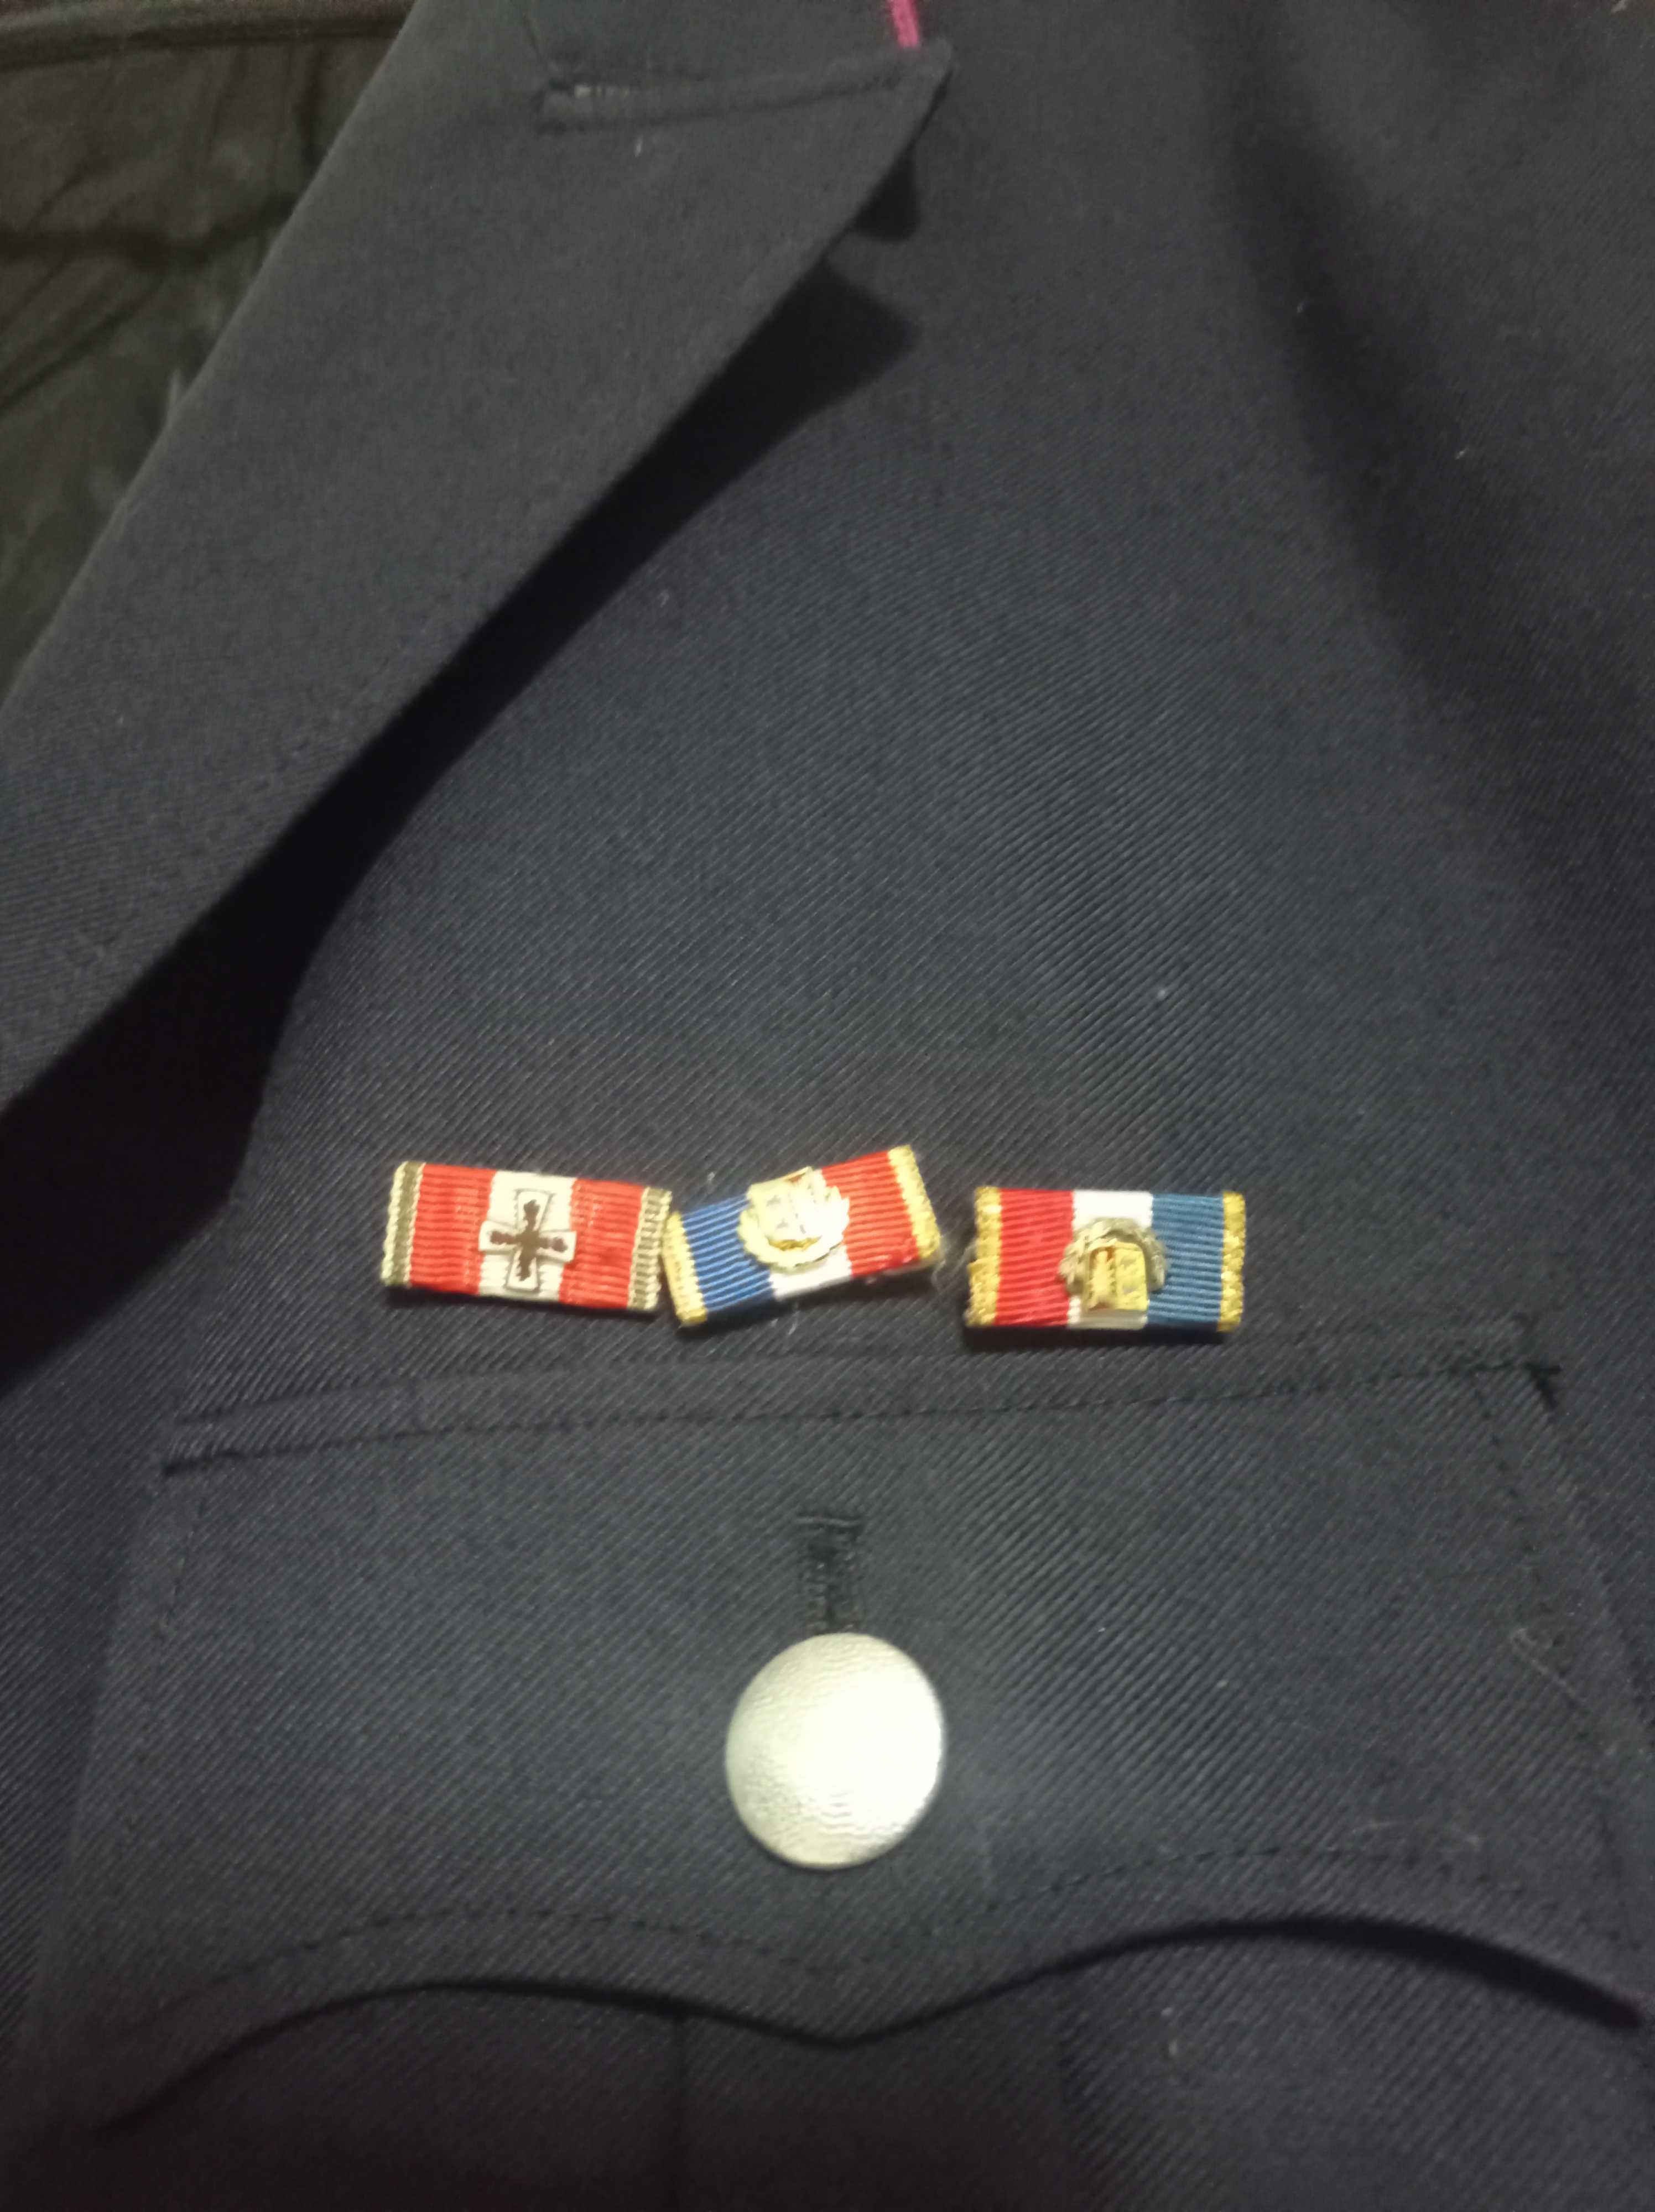 Bluza mundurowa niemiecka strażacka